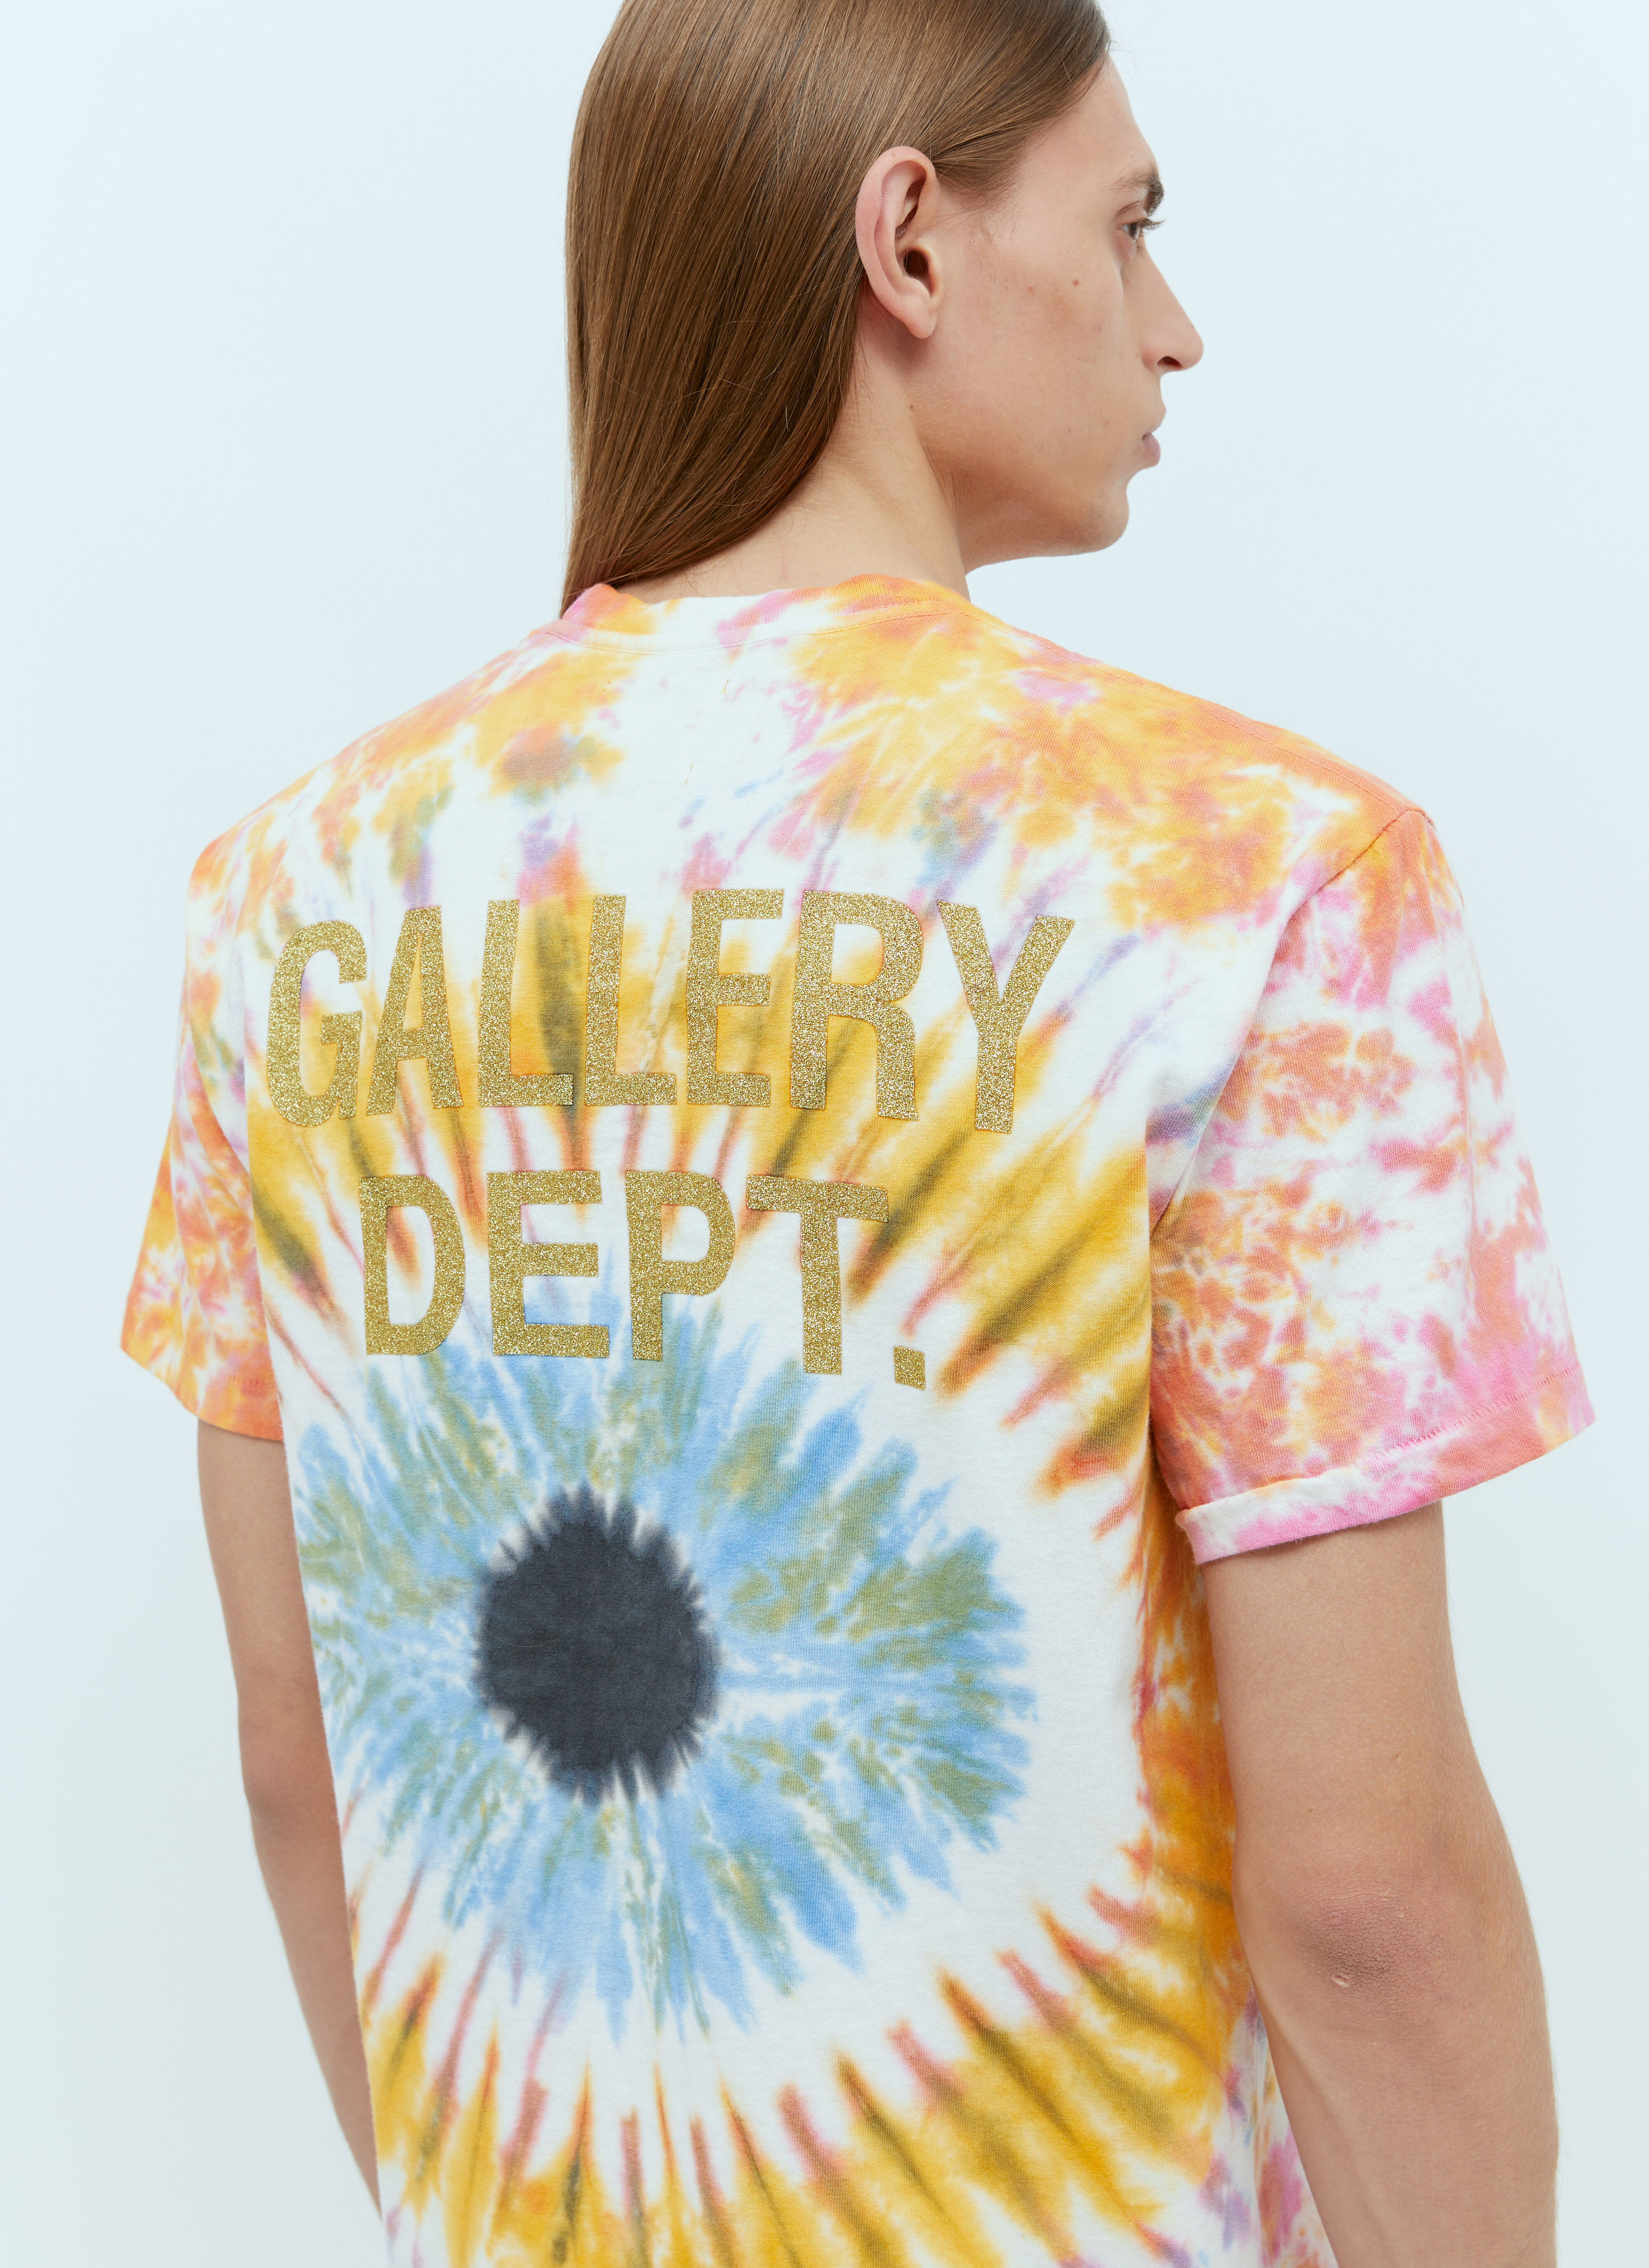 Gallery Dept. Eye Dye T-Shirt White gdp0153021